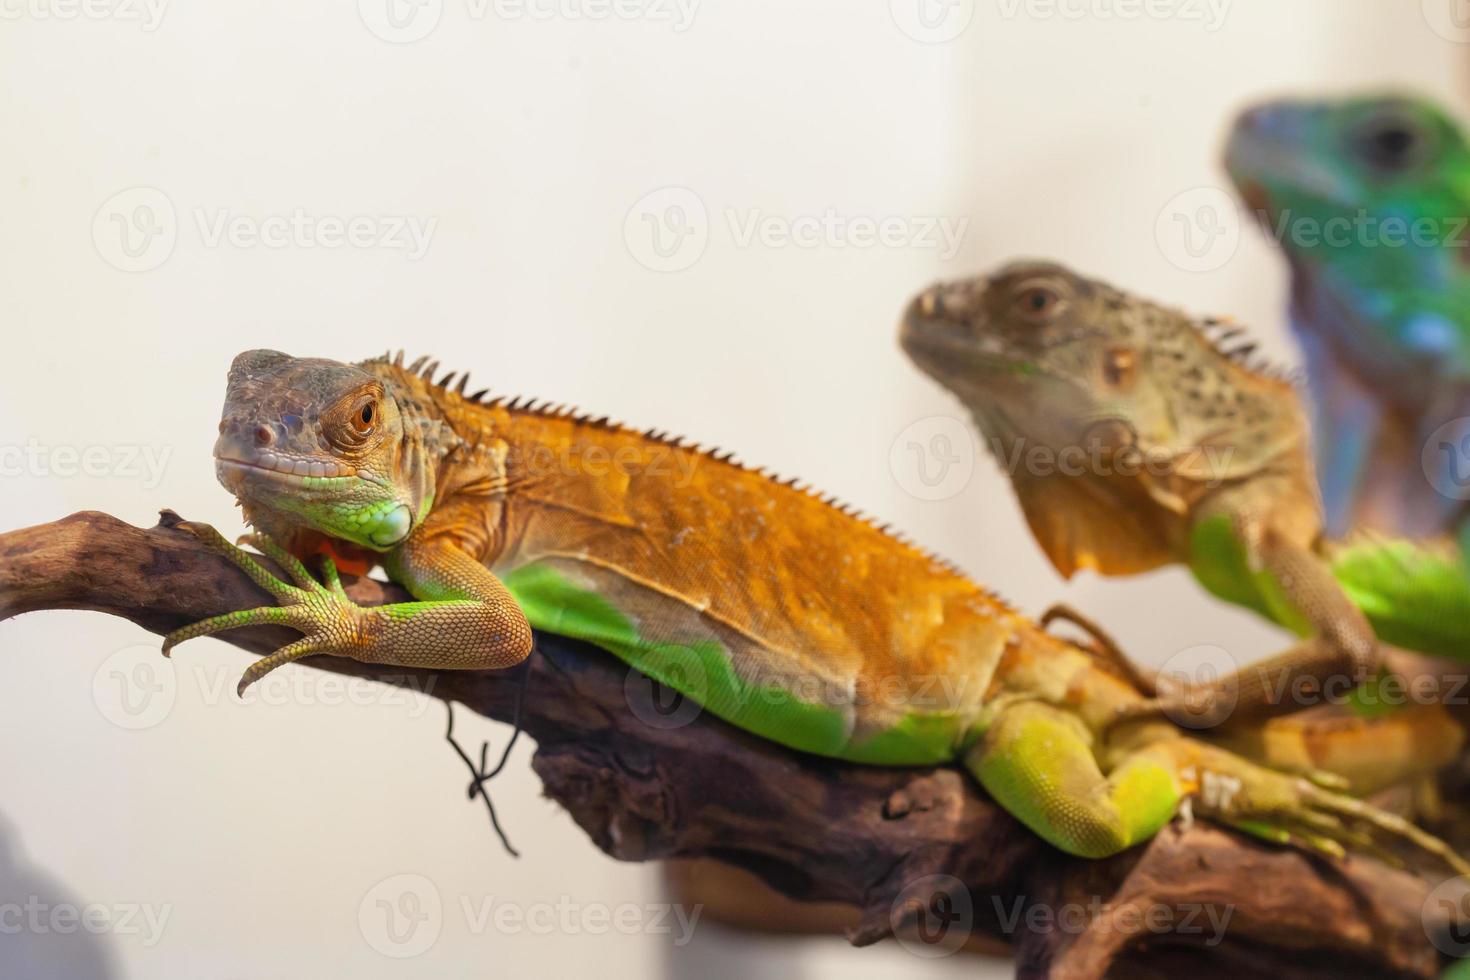 Small iguana with green skin close up photo